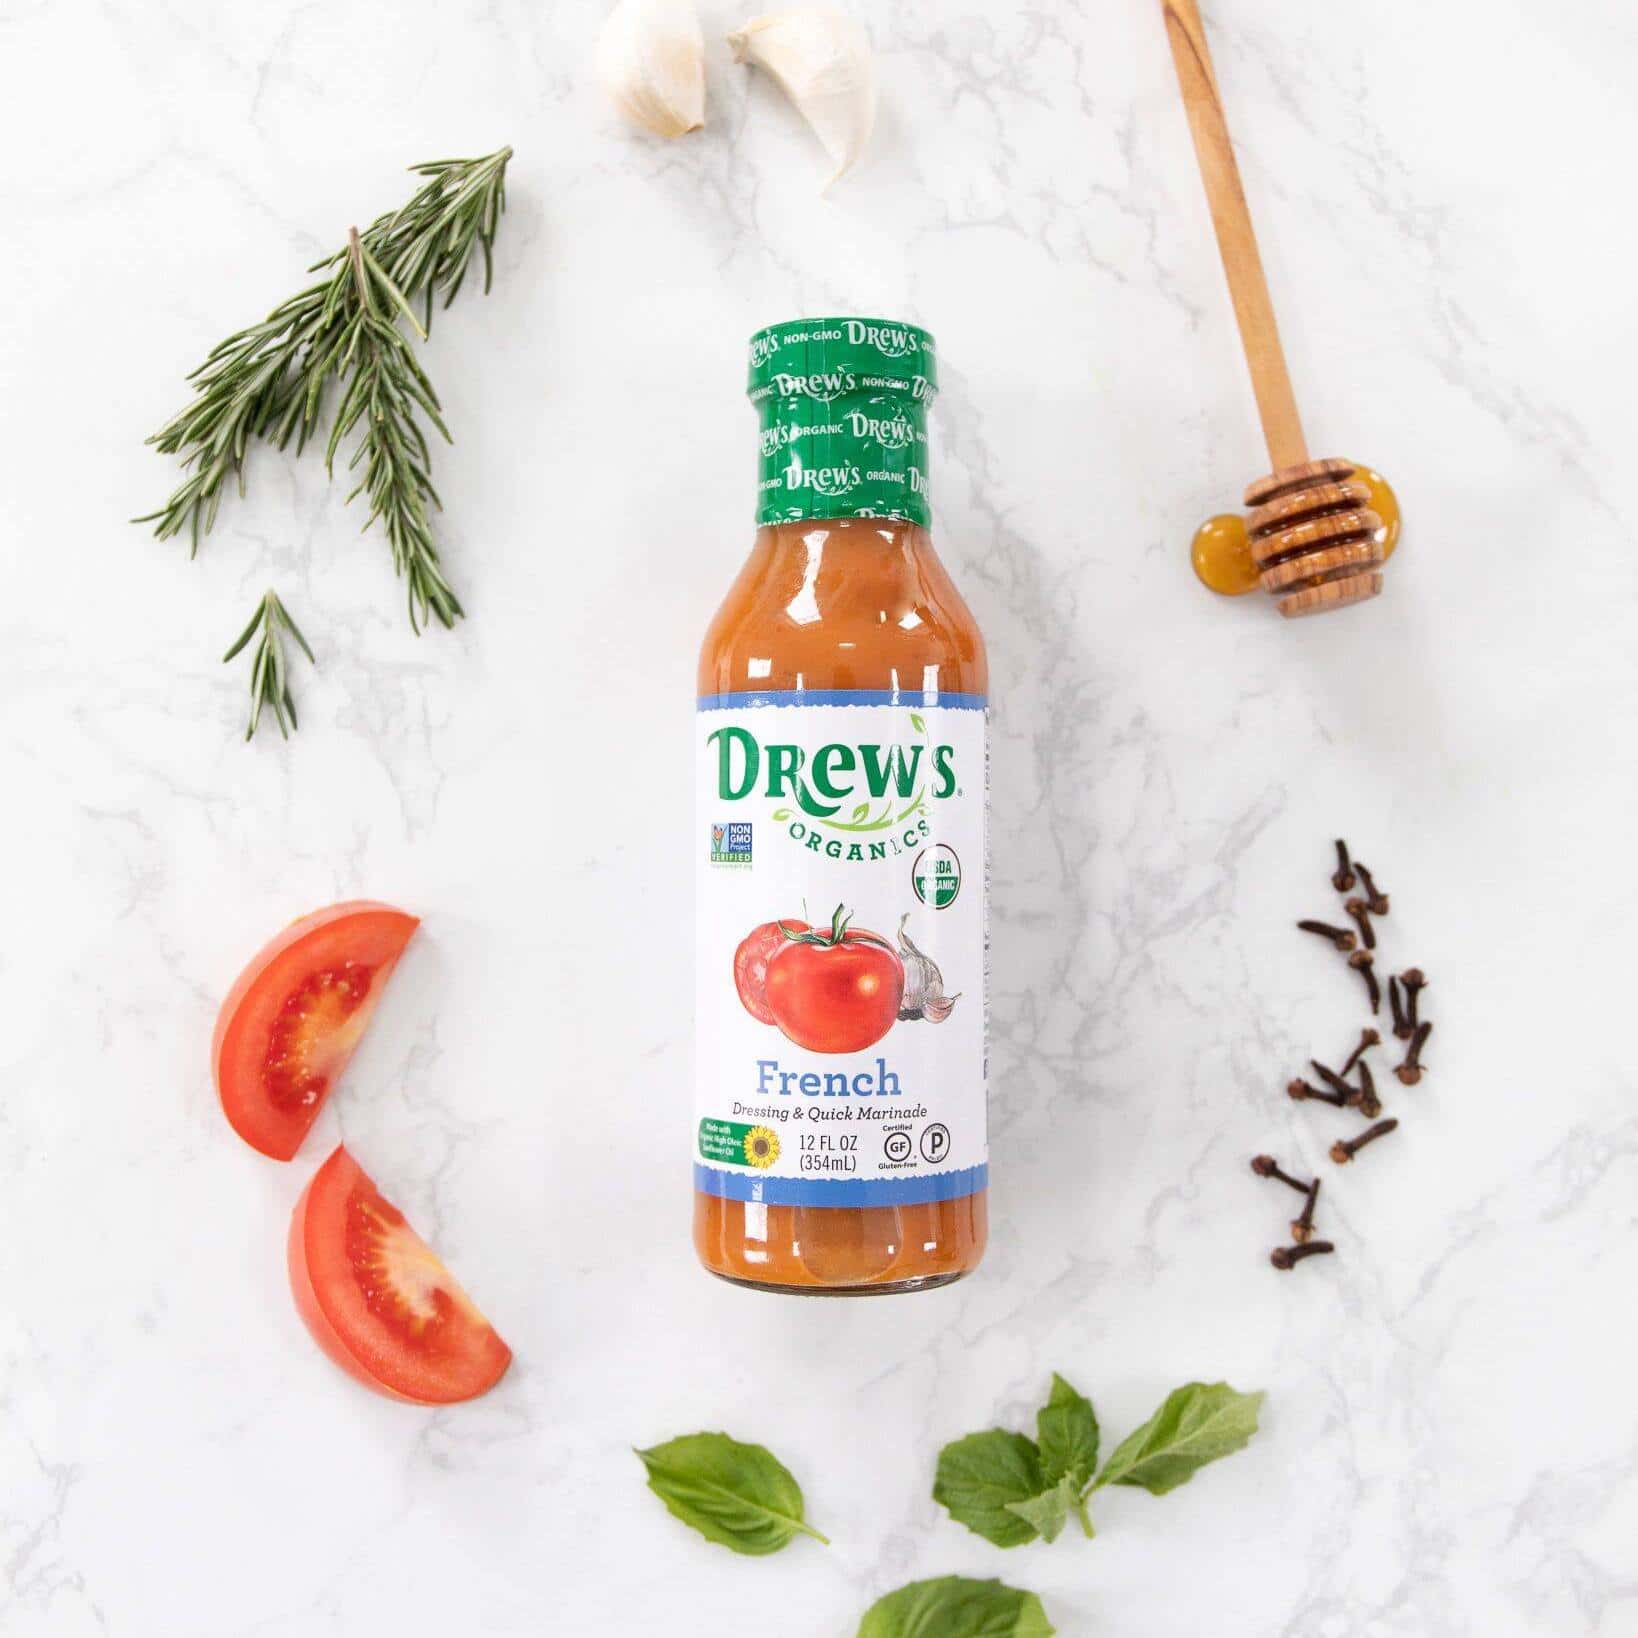 Drew’s Organics